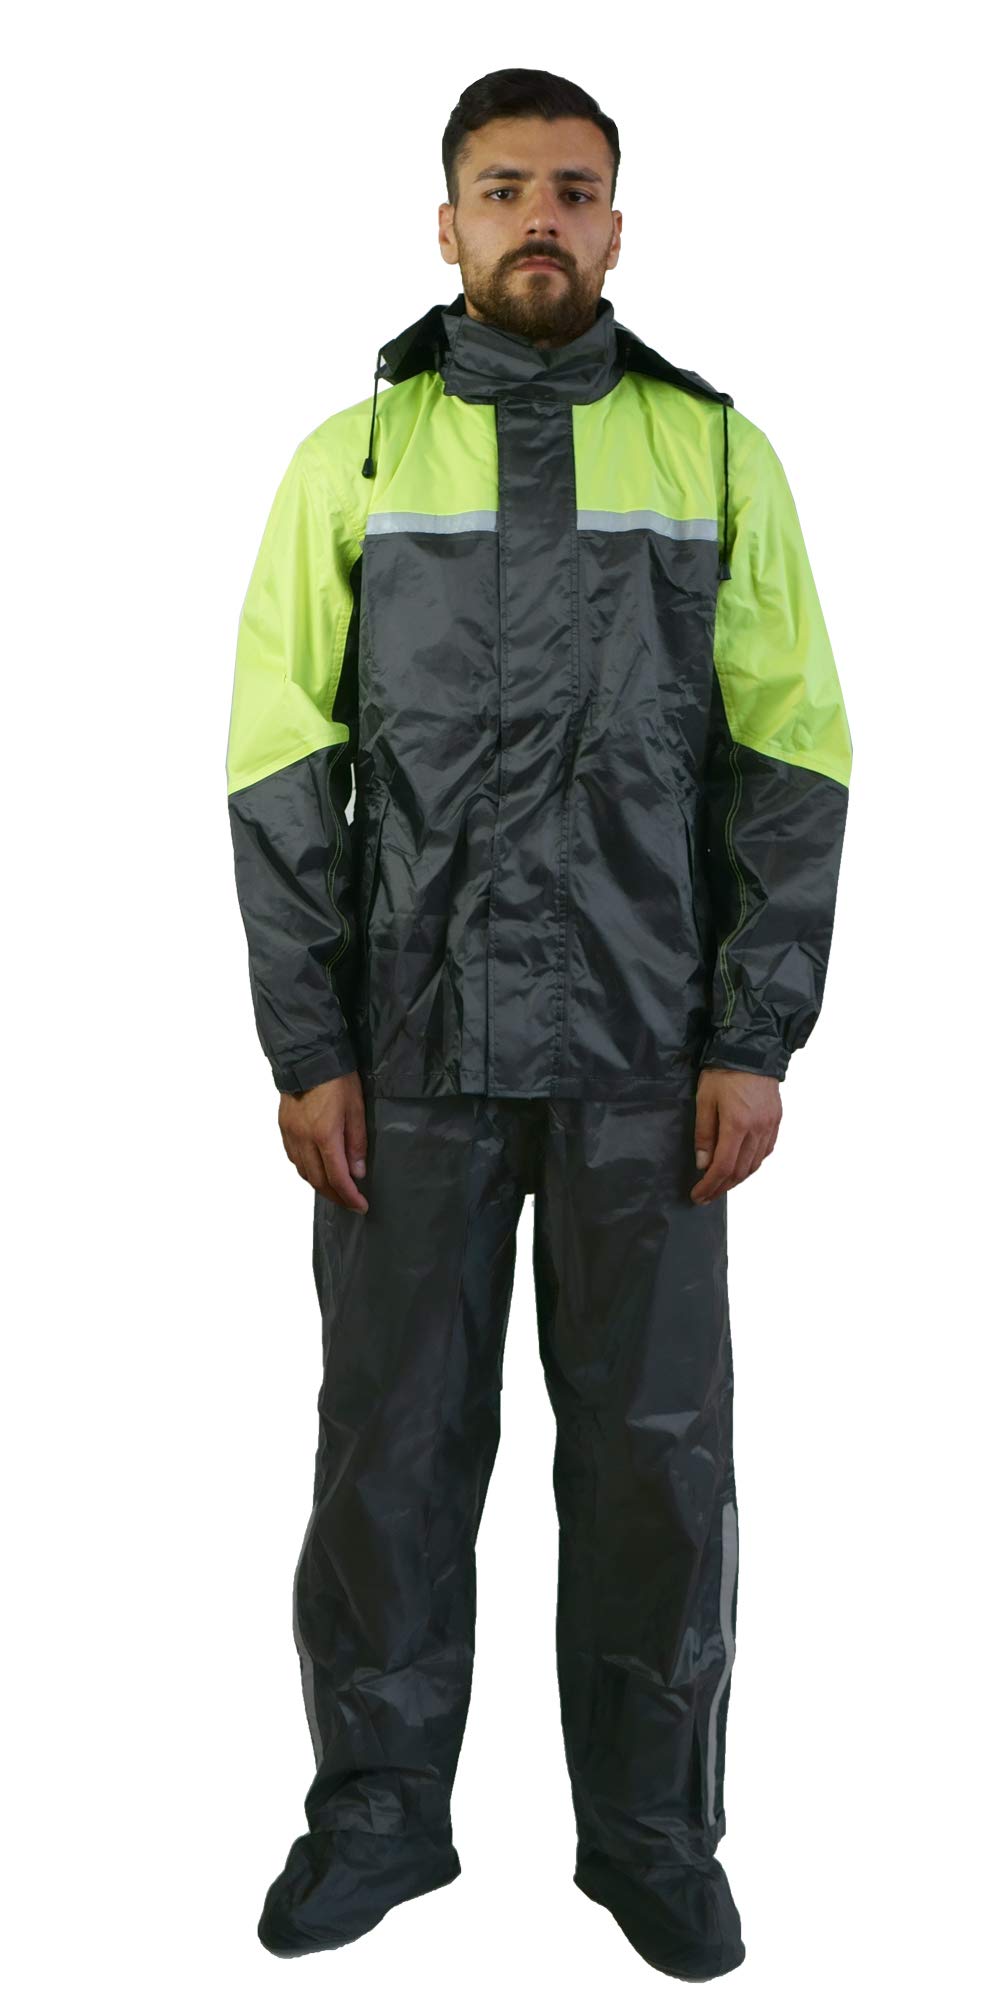 TJ MARVIN Regenschutz Set (Jacke, Hose, Stiefelbezug und Rucksäcke) CLASSICO E31 M Nero Giallo fluo von TJ MARVIN